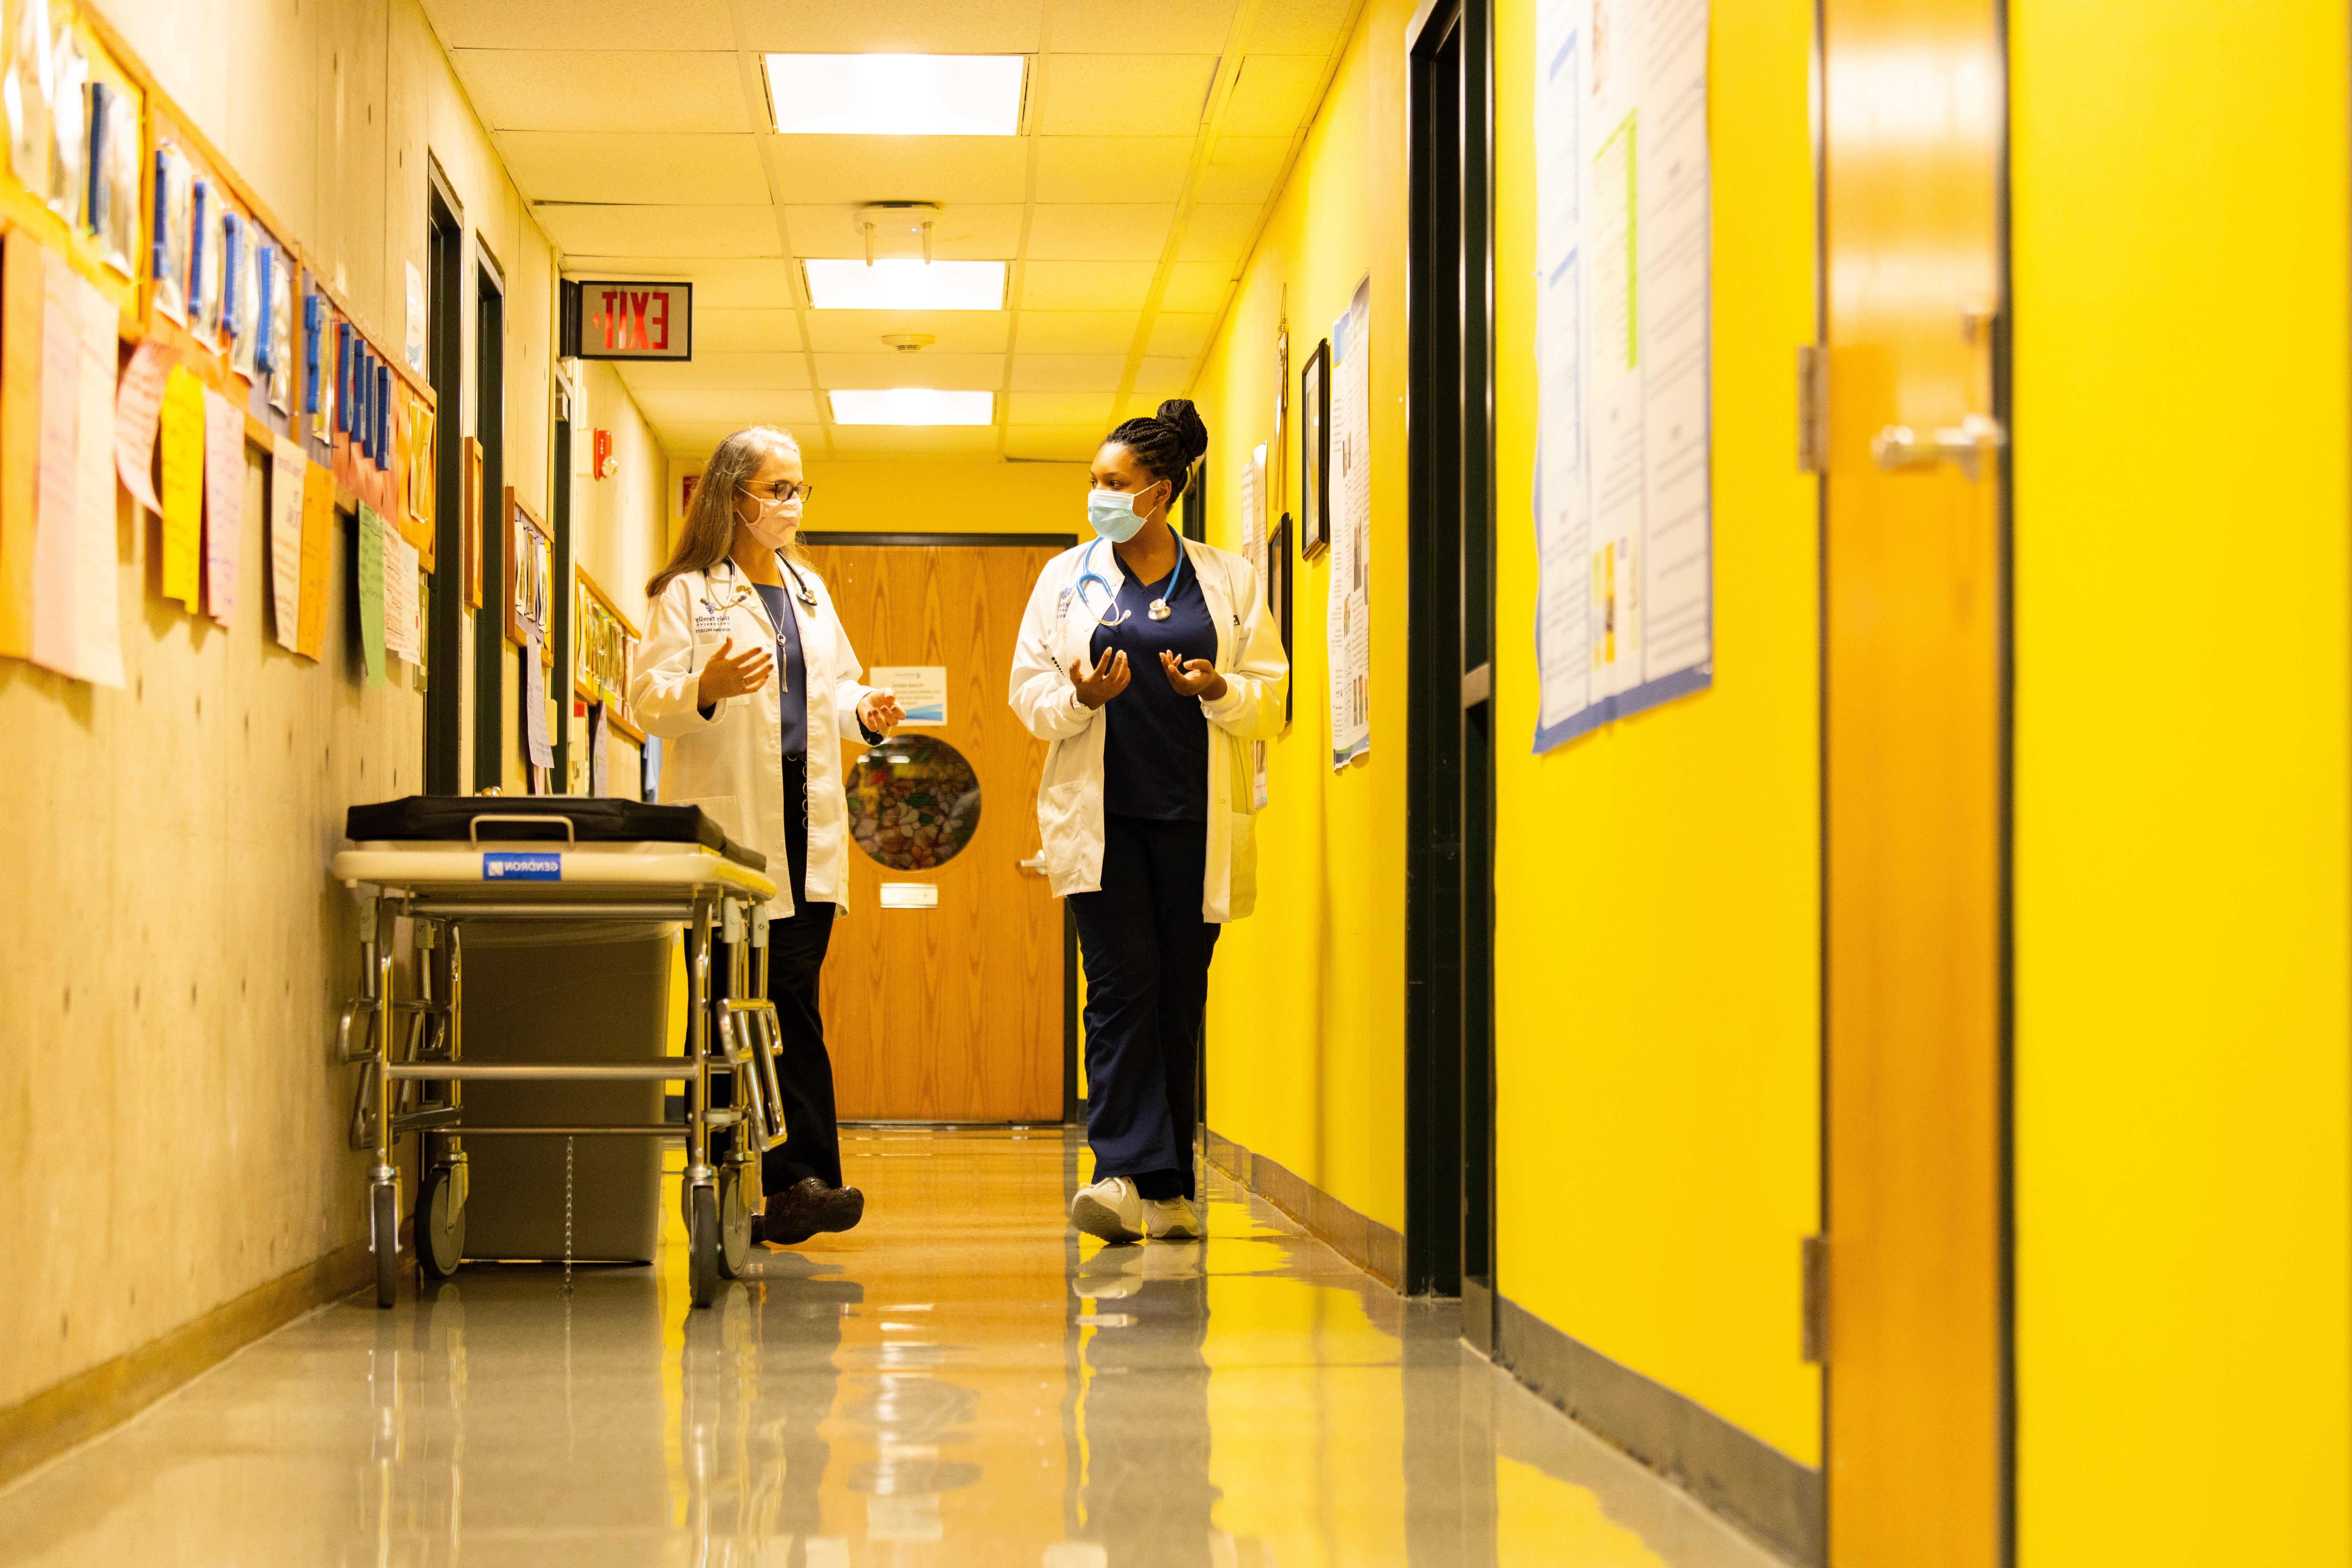 Dr. and student walk through Nursing Education Center